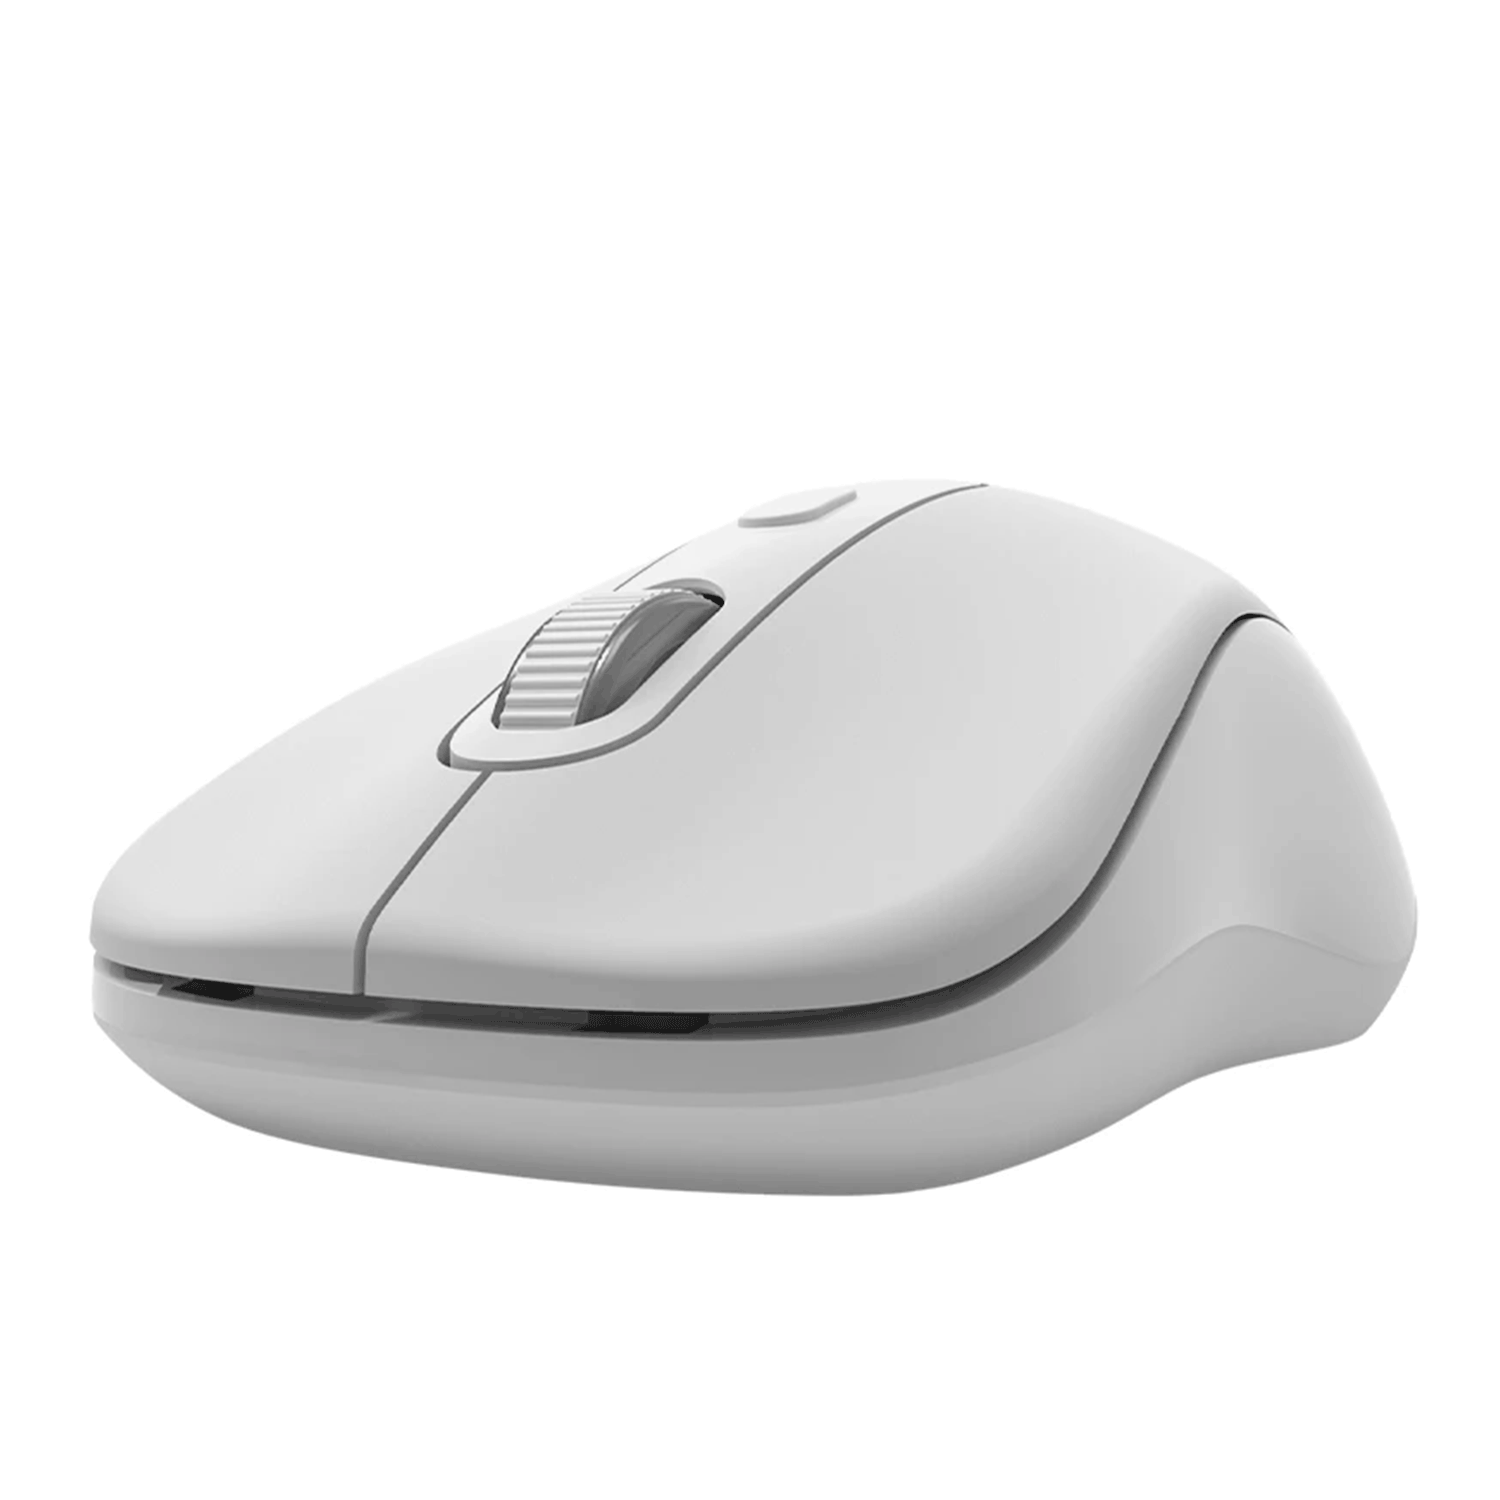 Mouse Aigo M2 - Branco